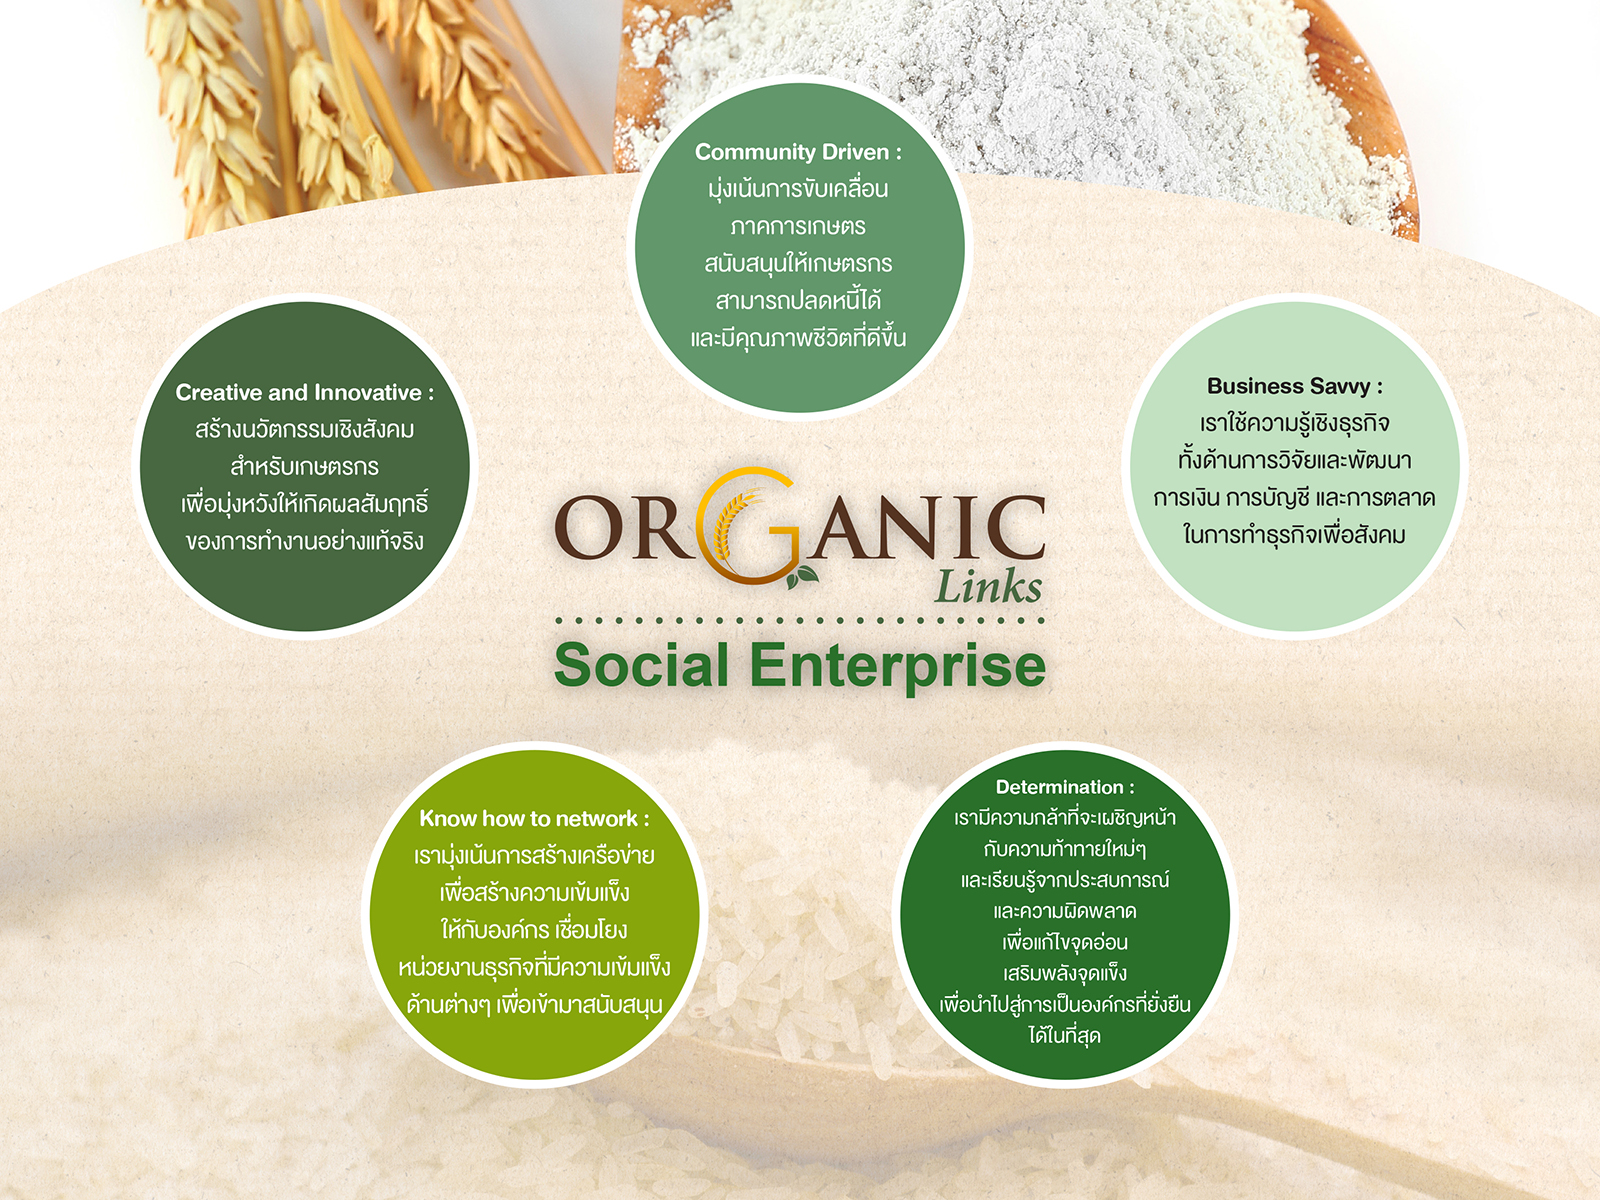 We Are Organic Links | Organic Links